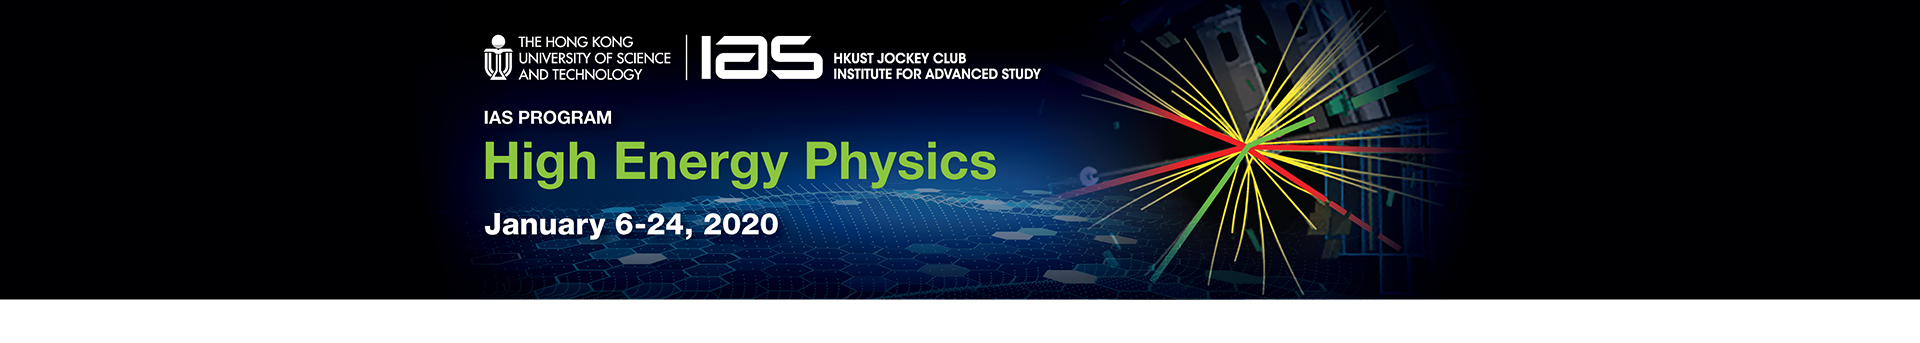 IAS Program on High Energy Physics (2020)